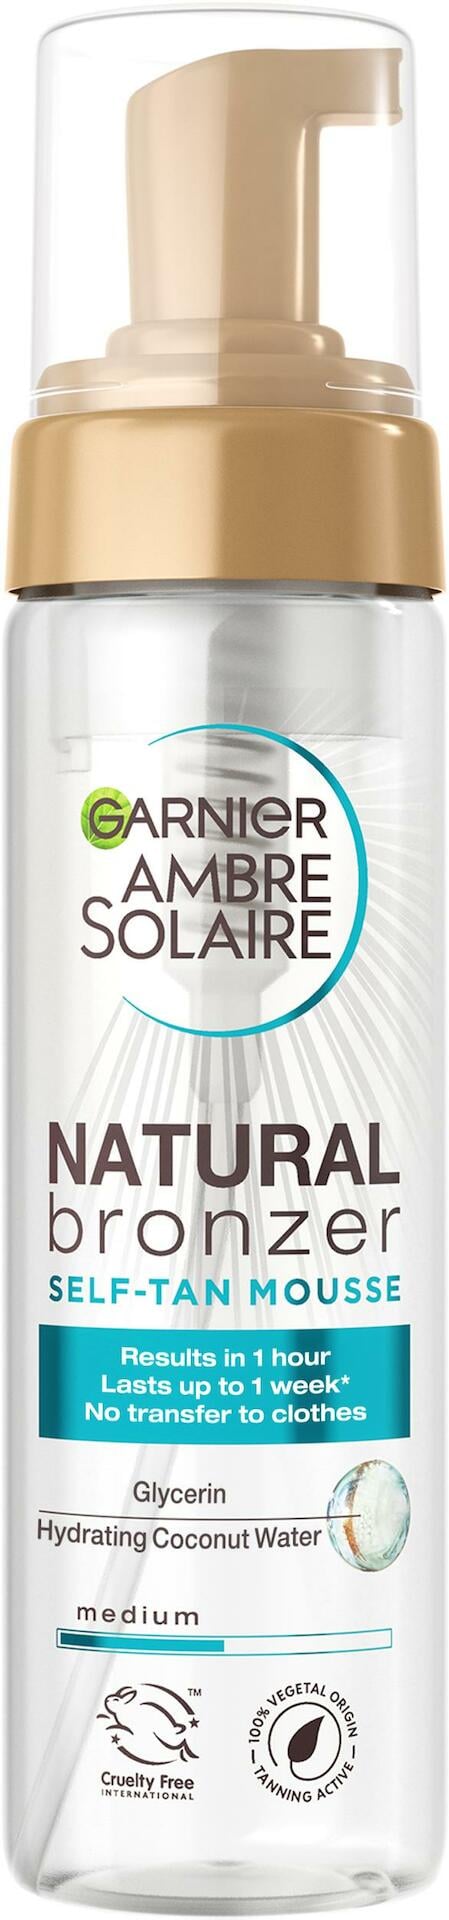 Garnier Ambre Solaire Natural Bronzer Self Tan Mousse 200 ml